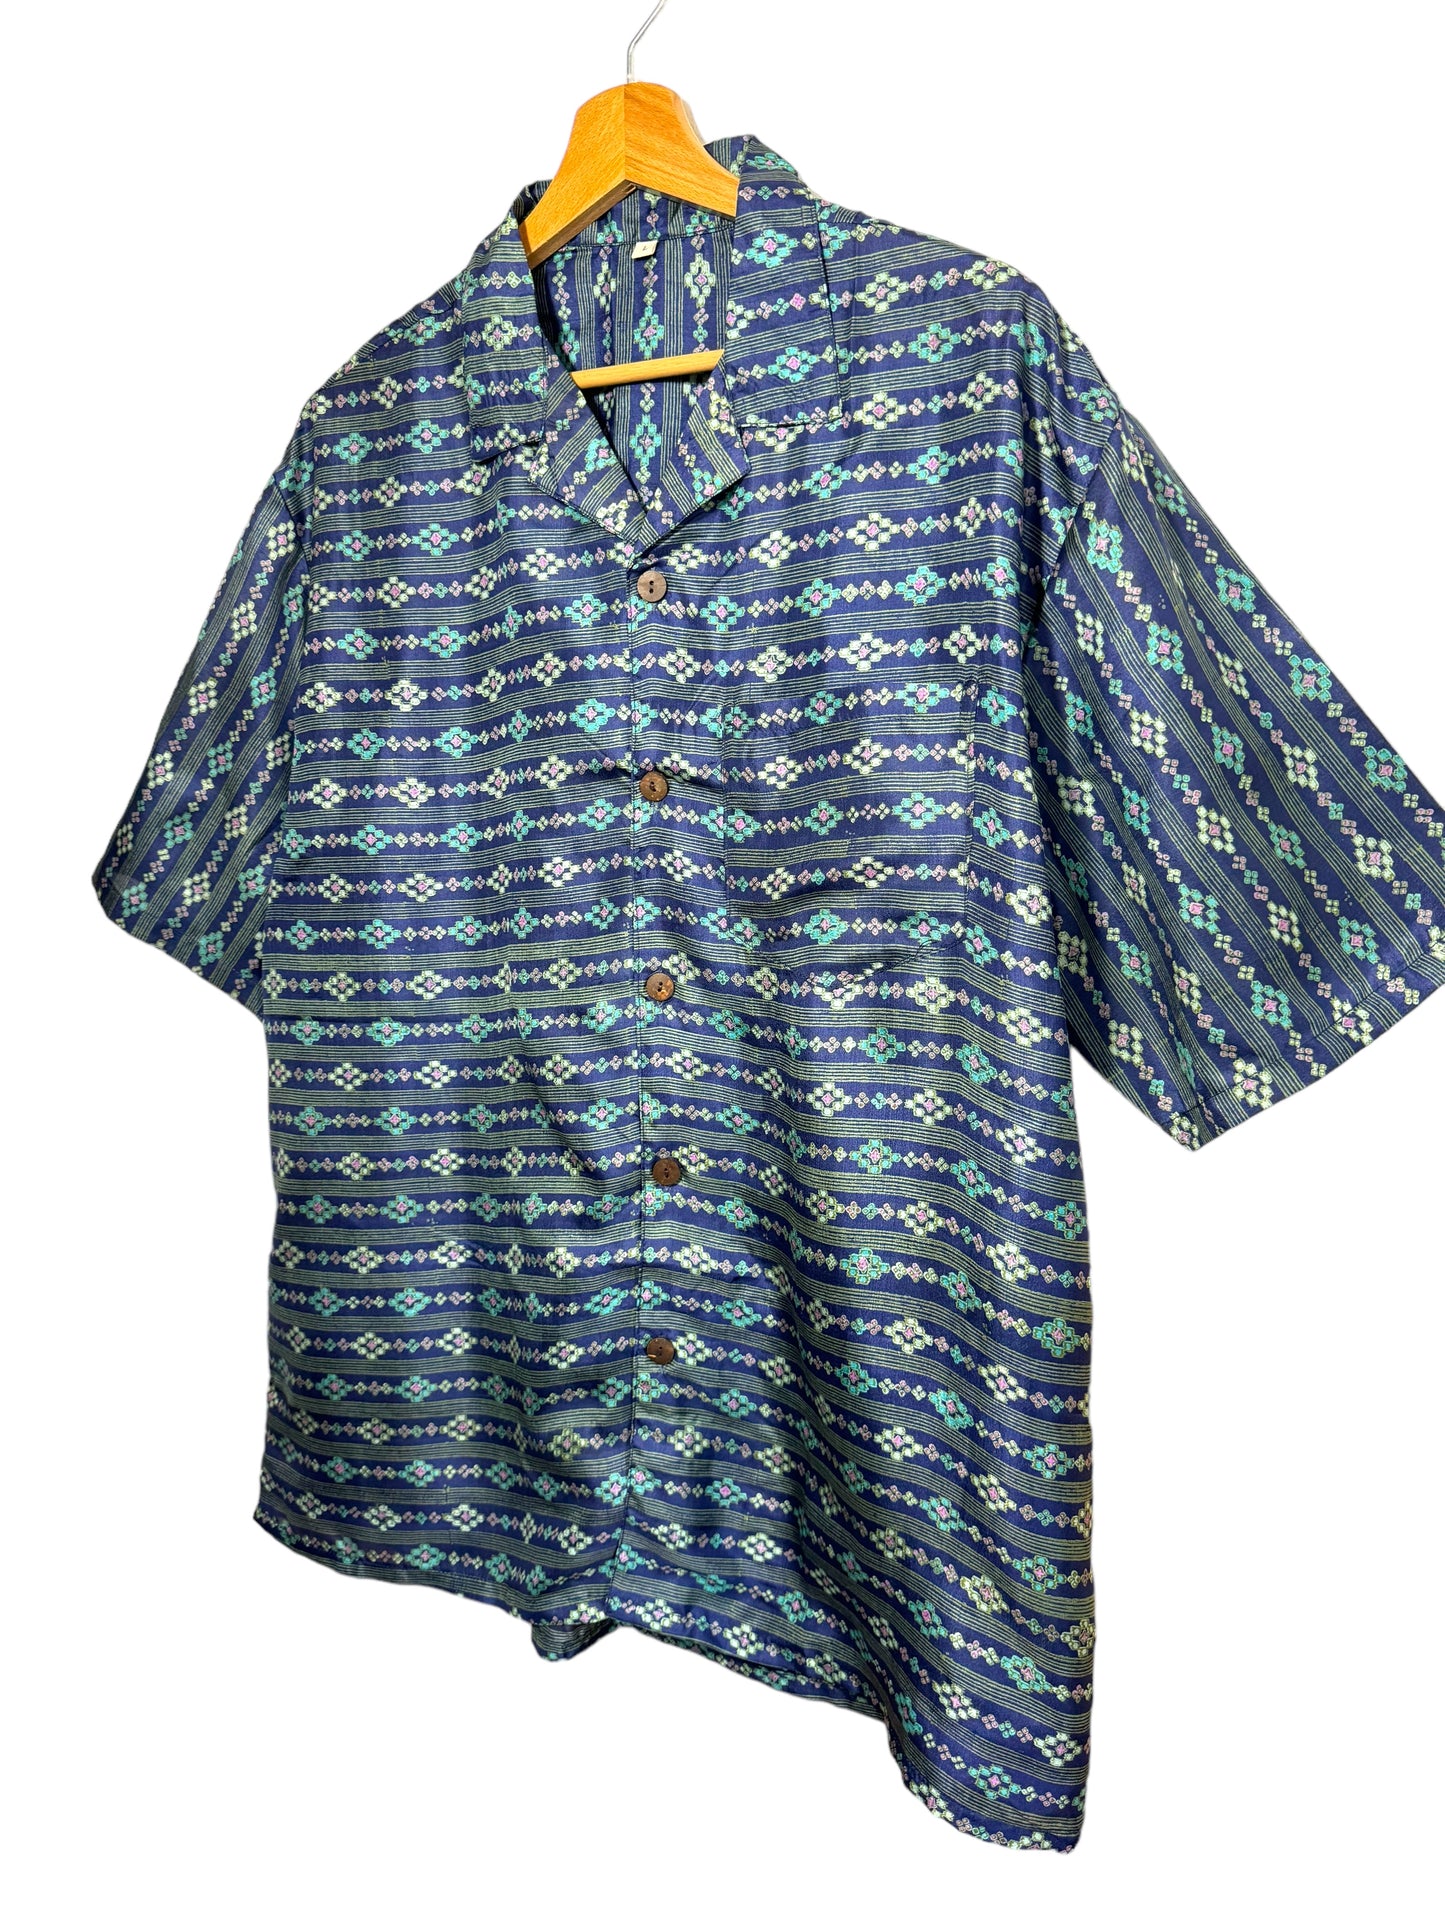 Vintage silk shirt (L)